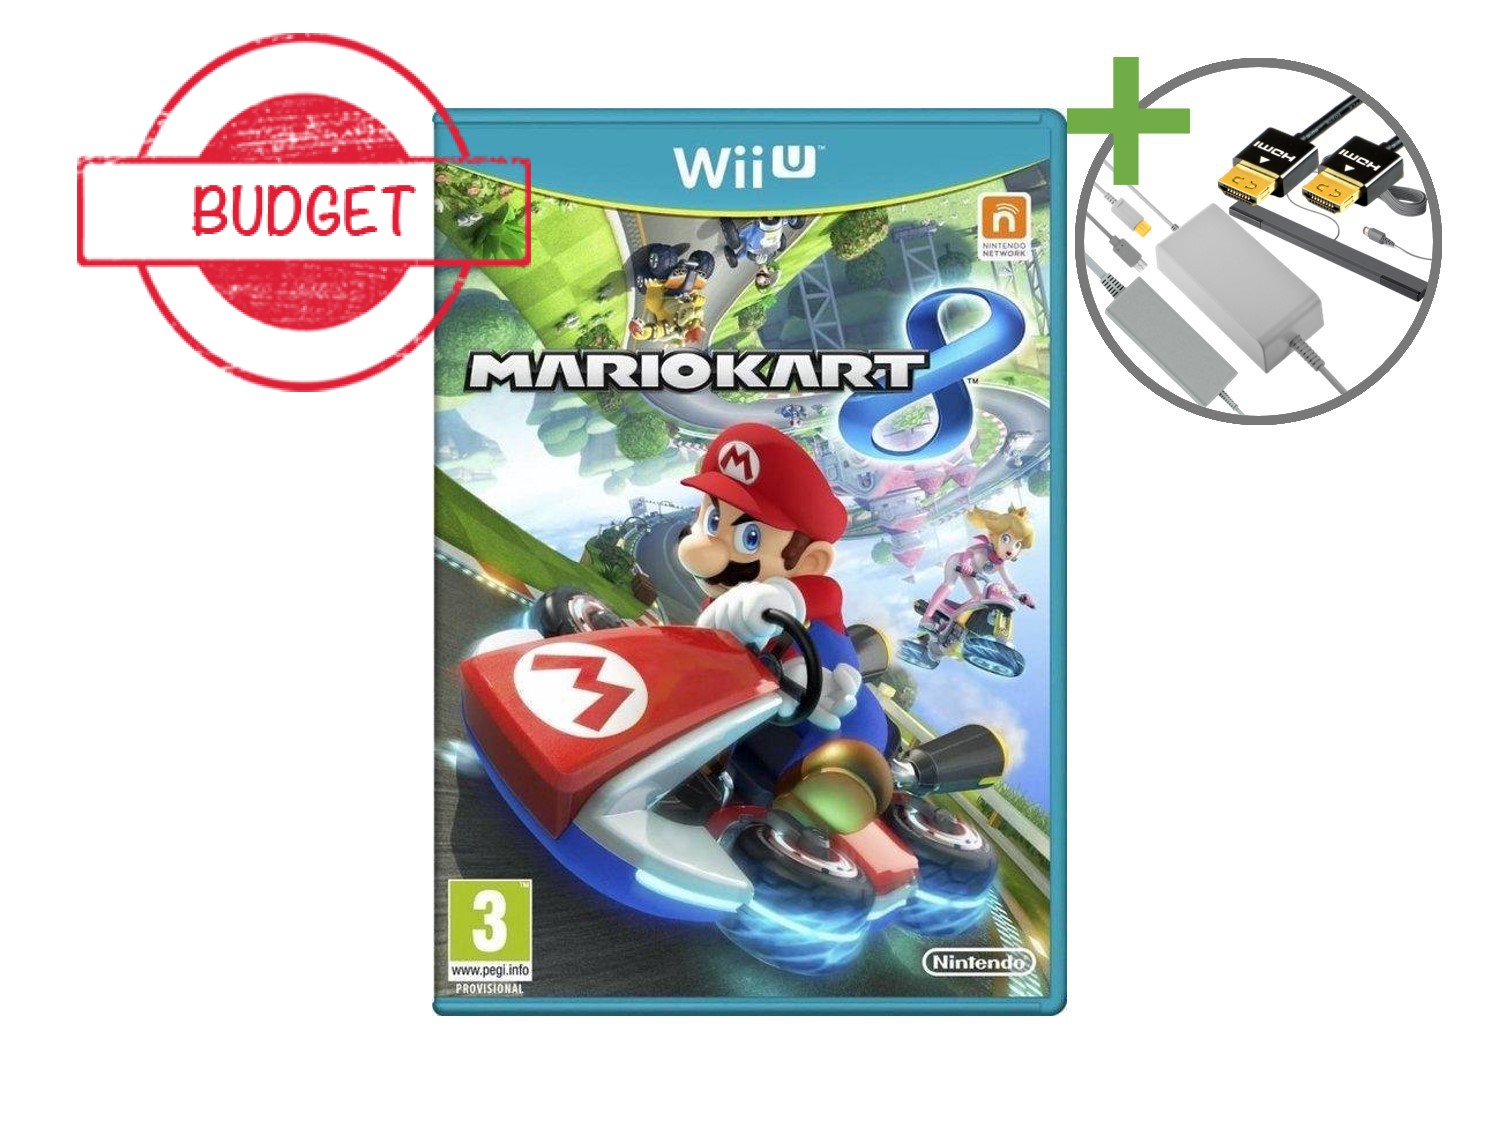 Nintendo Wii U Starter Pack - Mario Kart 8 Edition - Budget - Wii U Hardware - 4